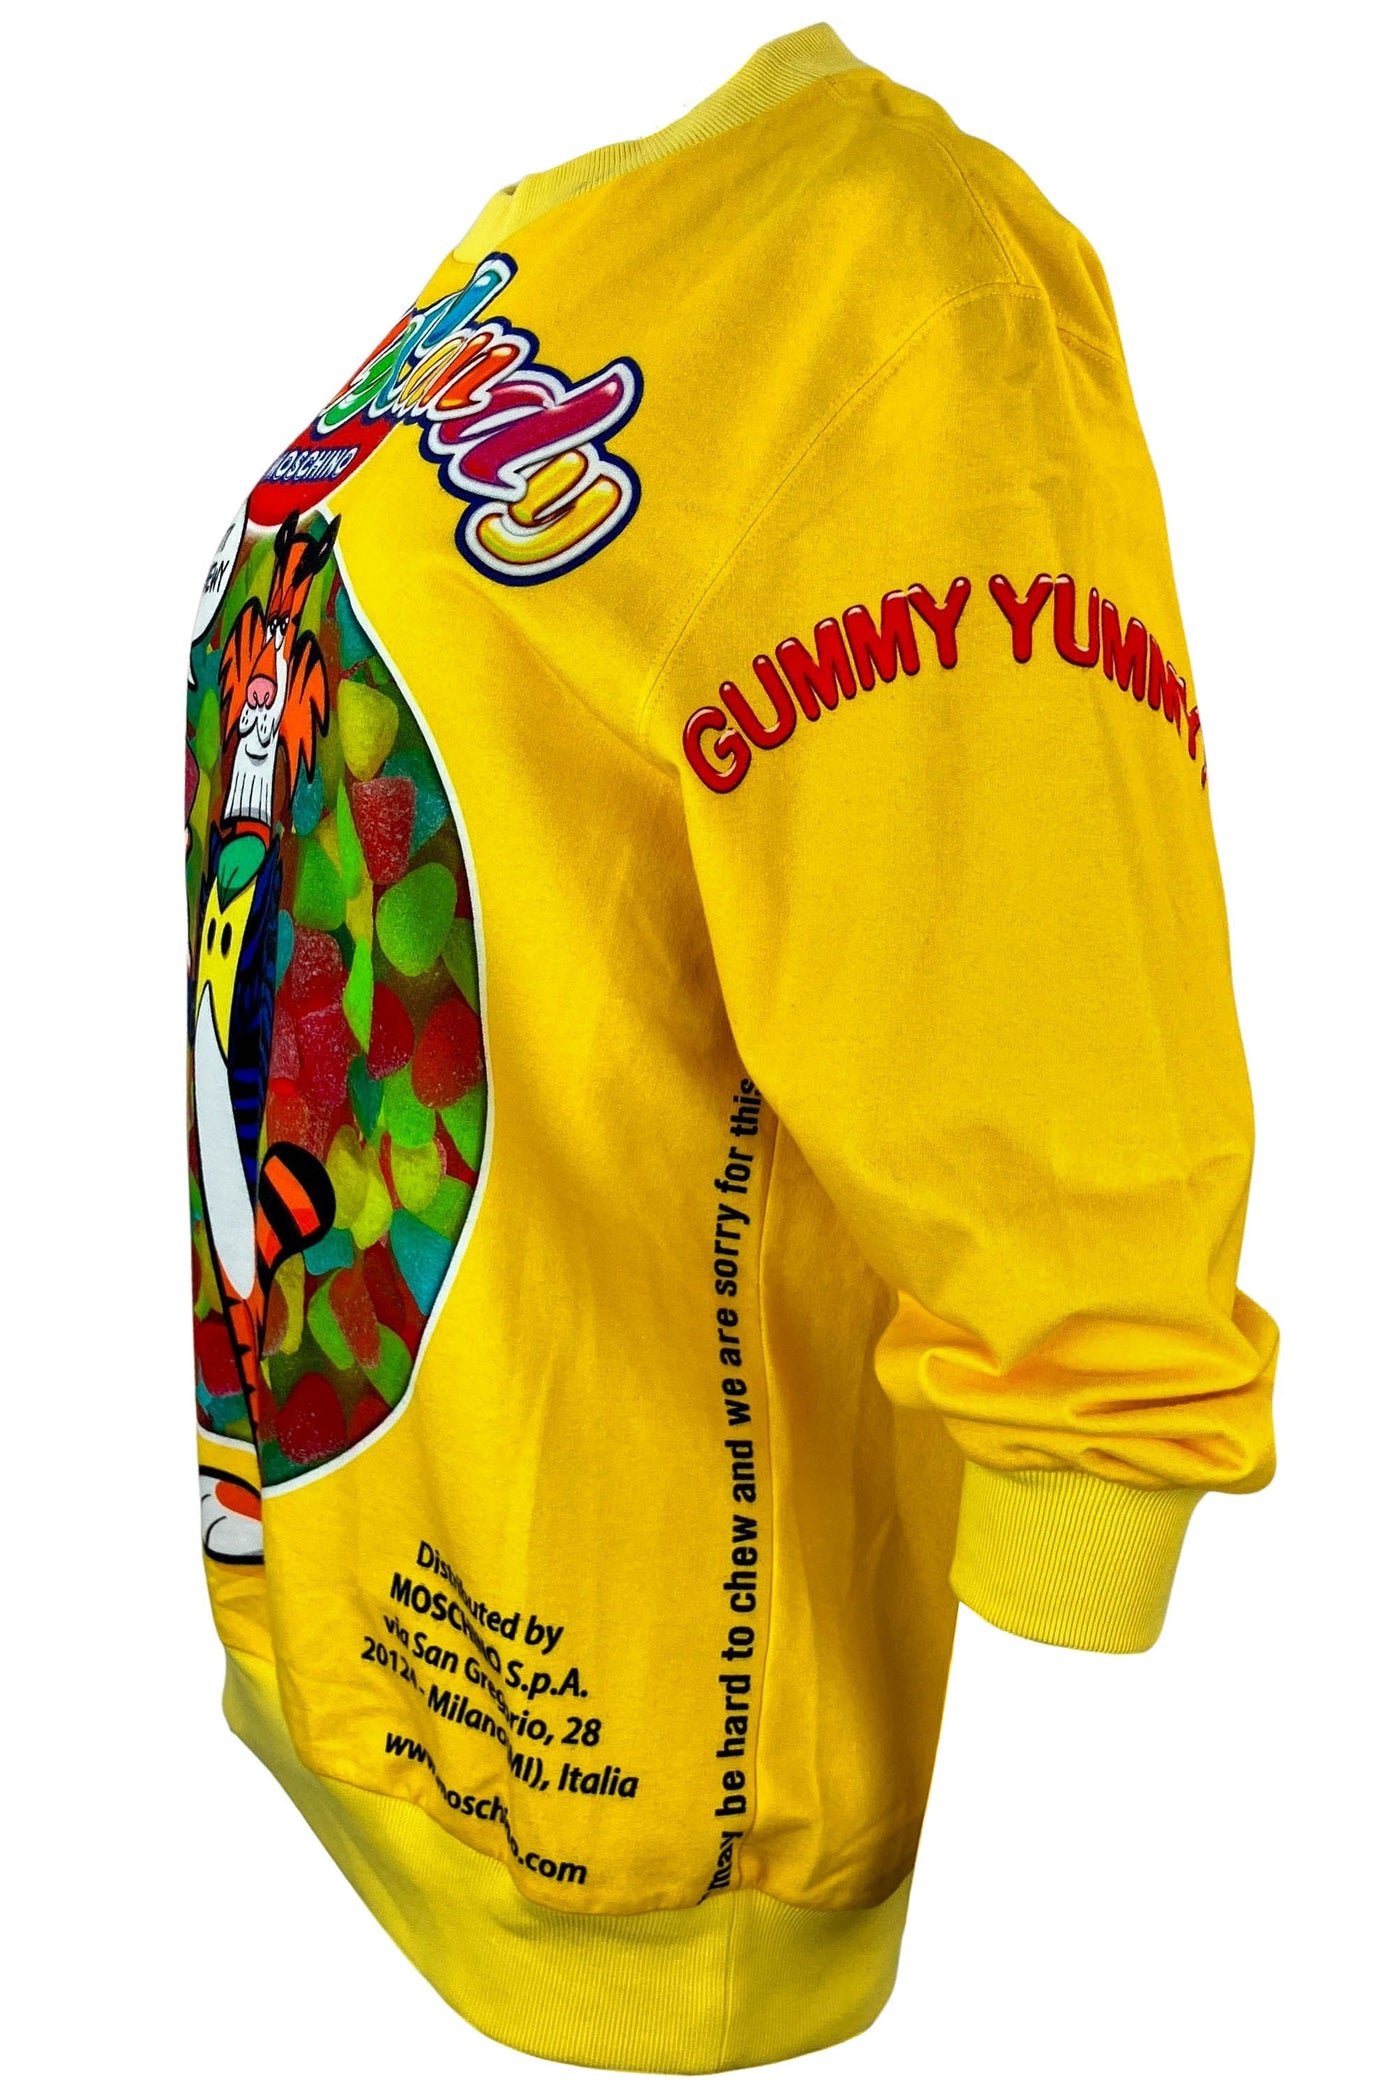 Moschino Dandy Candy Sweatshirt in Yellow - Discounts on Moschino at UAL